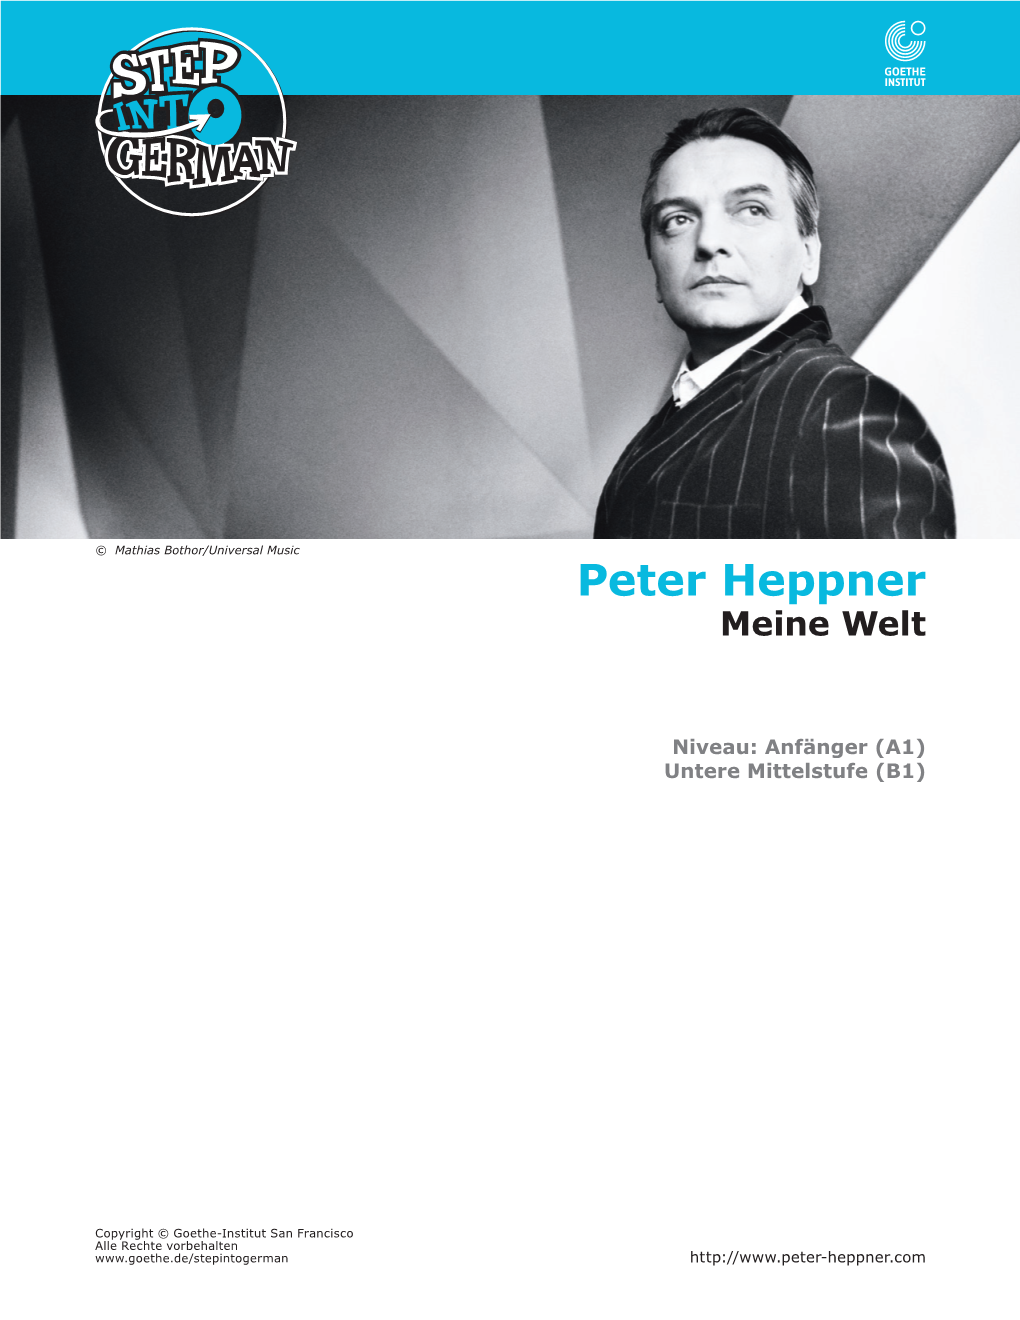 Step Into German | Peter Heppner